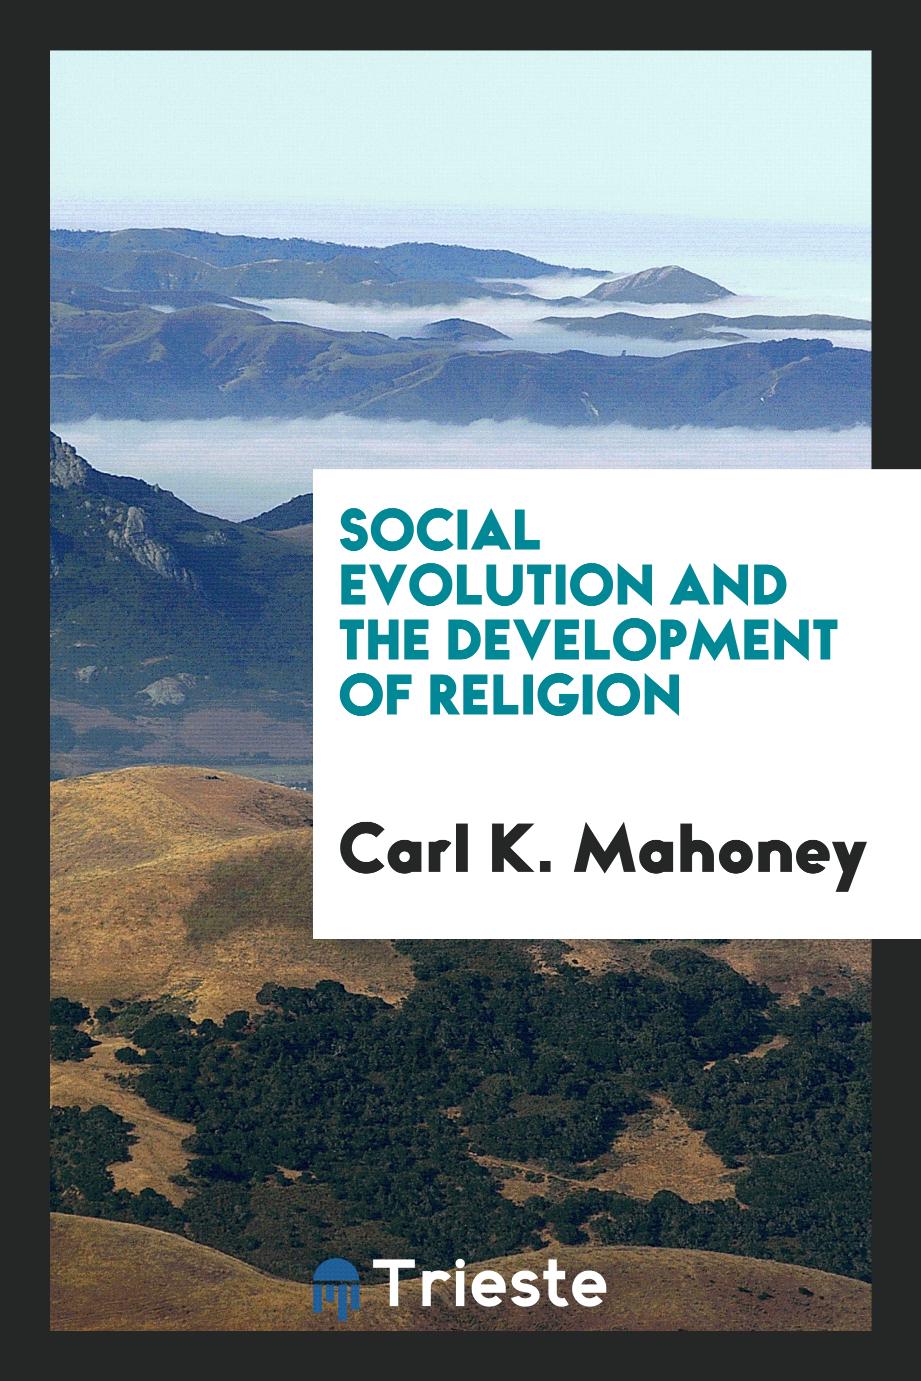 Social evolution and the development of religion